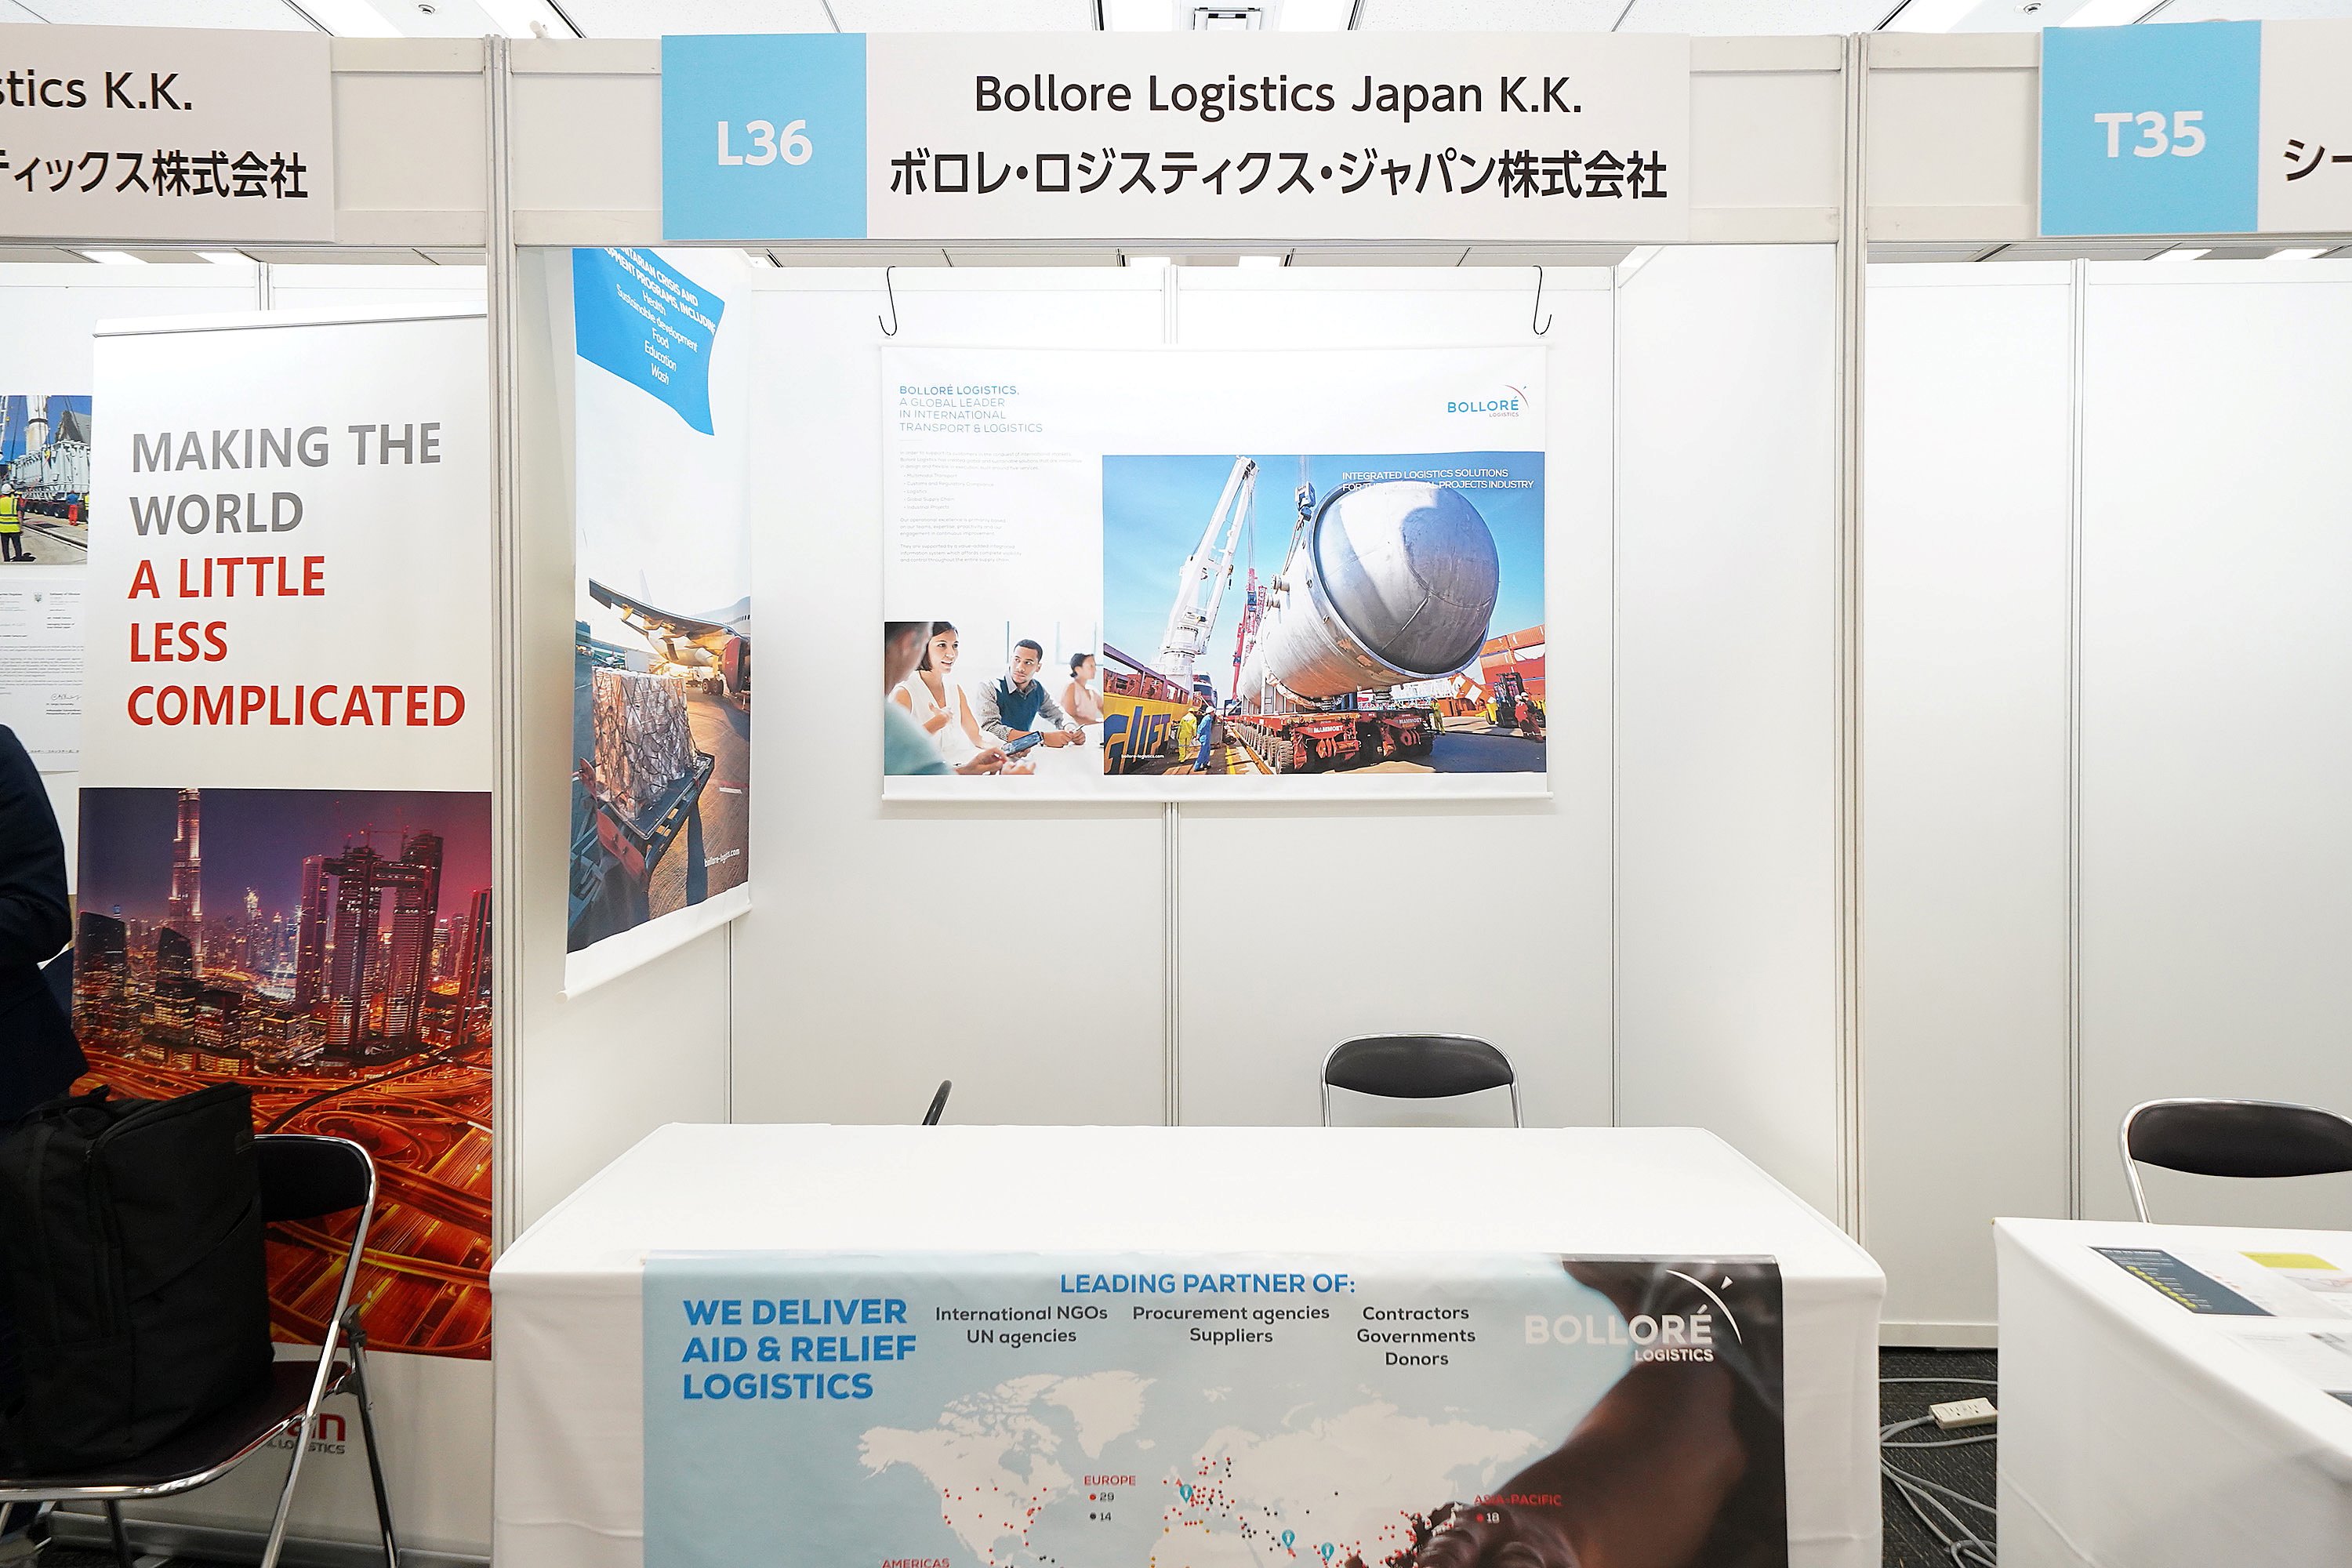 Bollore Logistics Japan K.K.